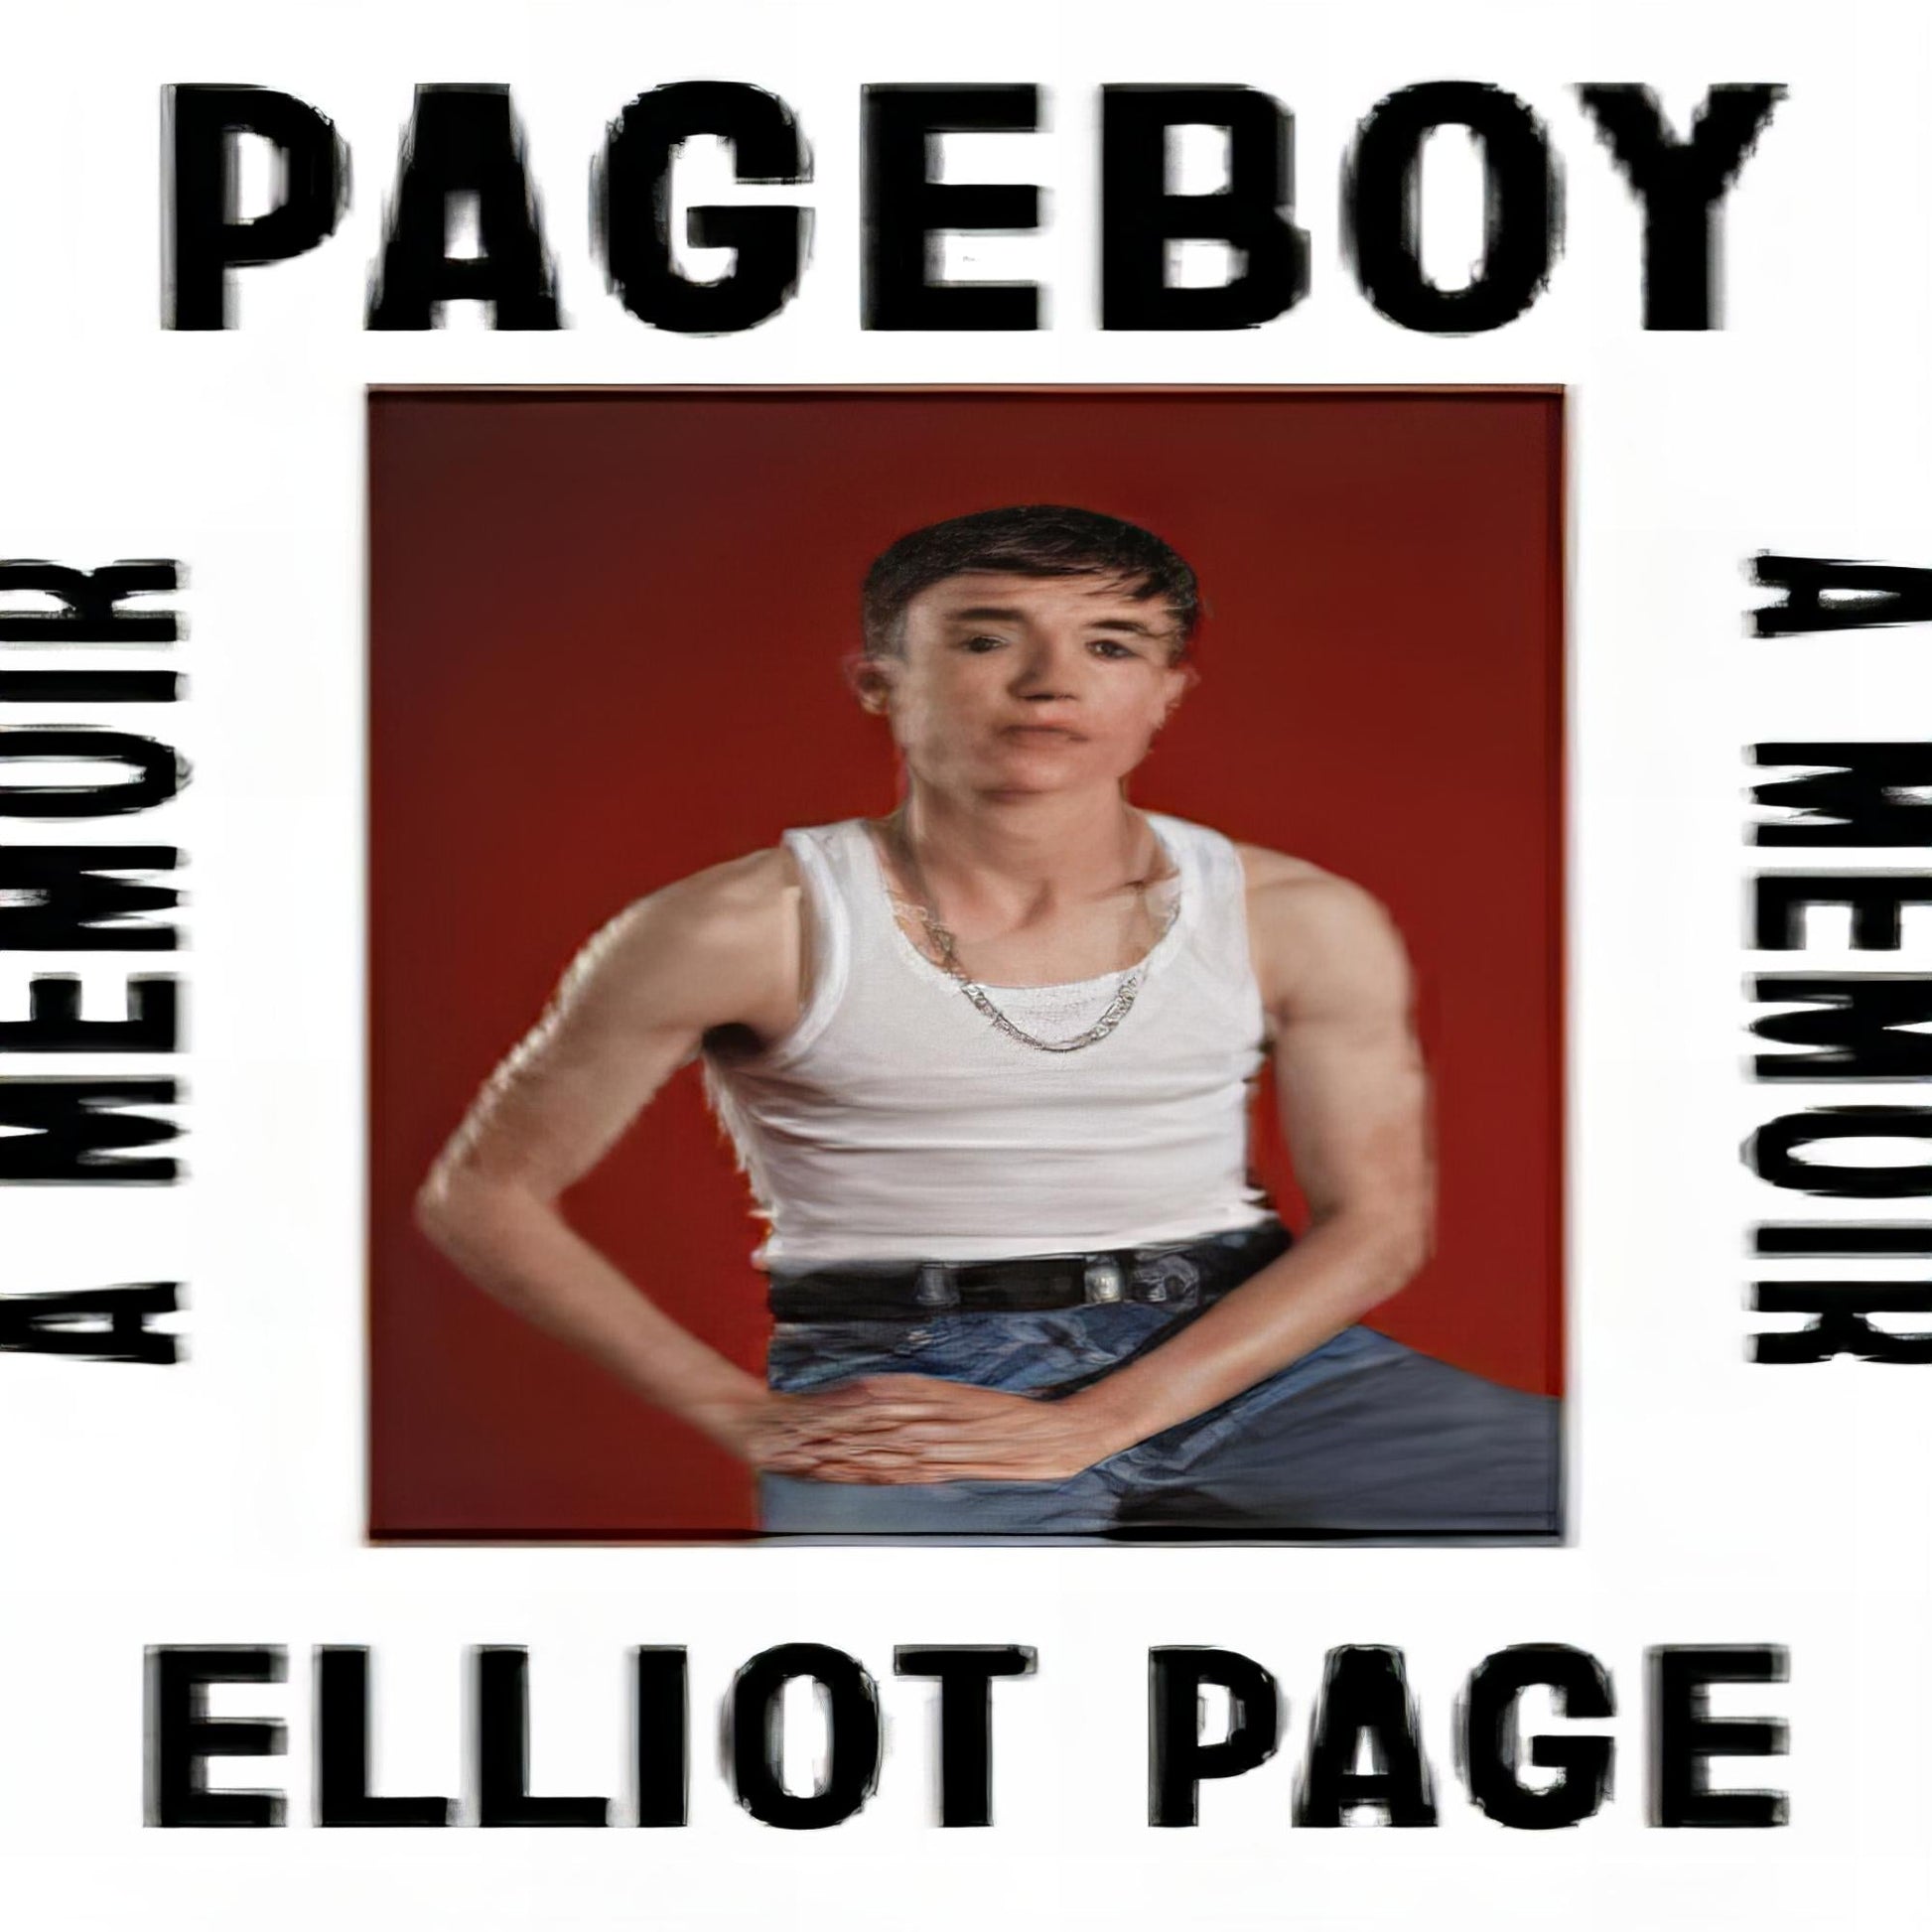 Pageboy: A Memoir255-111923-1250878357DPGBOOKSTORE.COM. Today's Bestsellers.